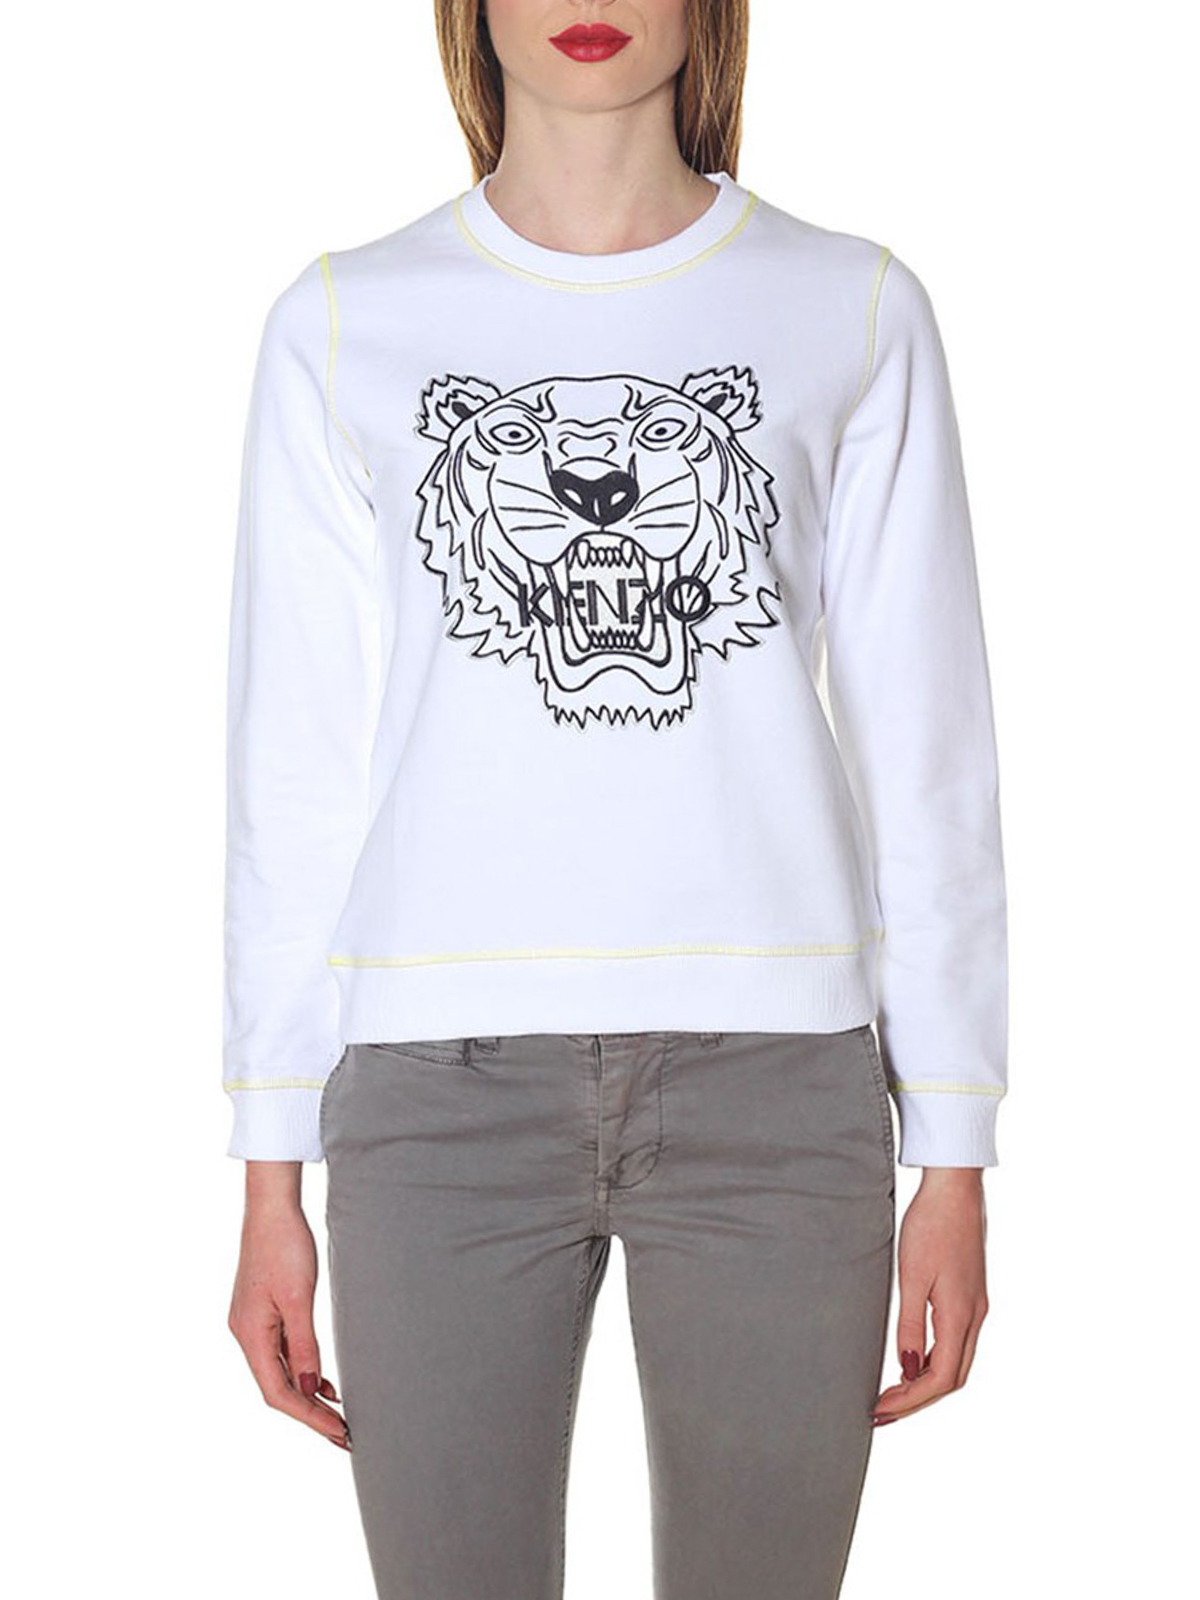 Sweatshirts & Sweaters Kenzo - Tiger embroidery white sweatshirt 